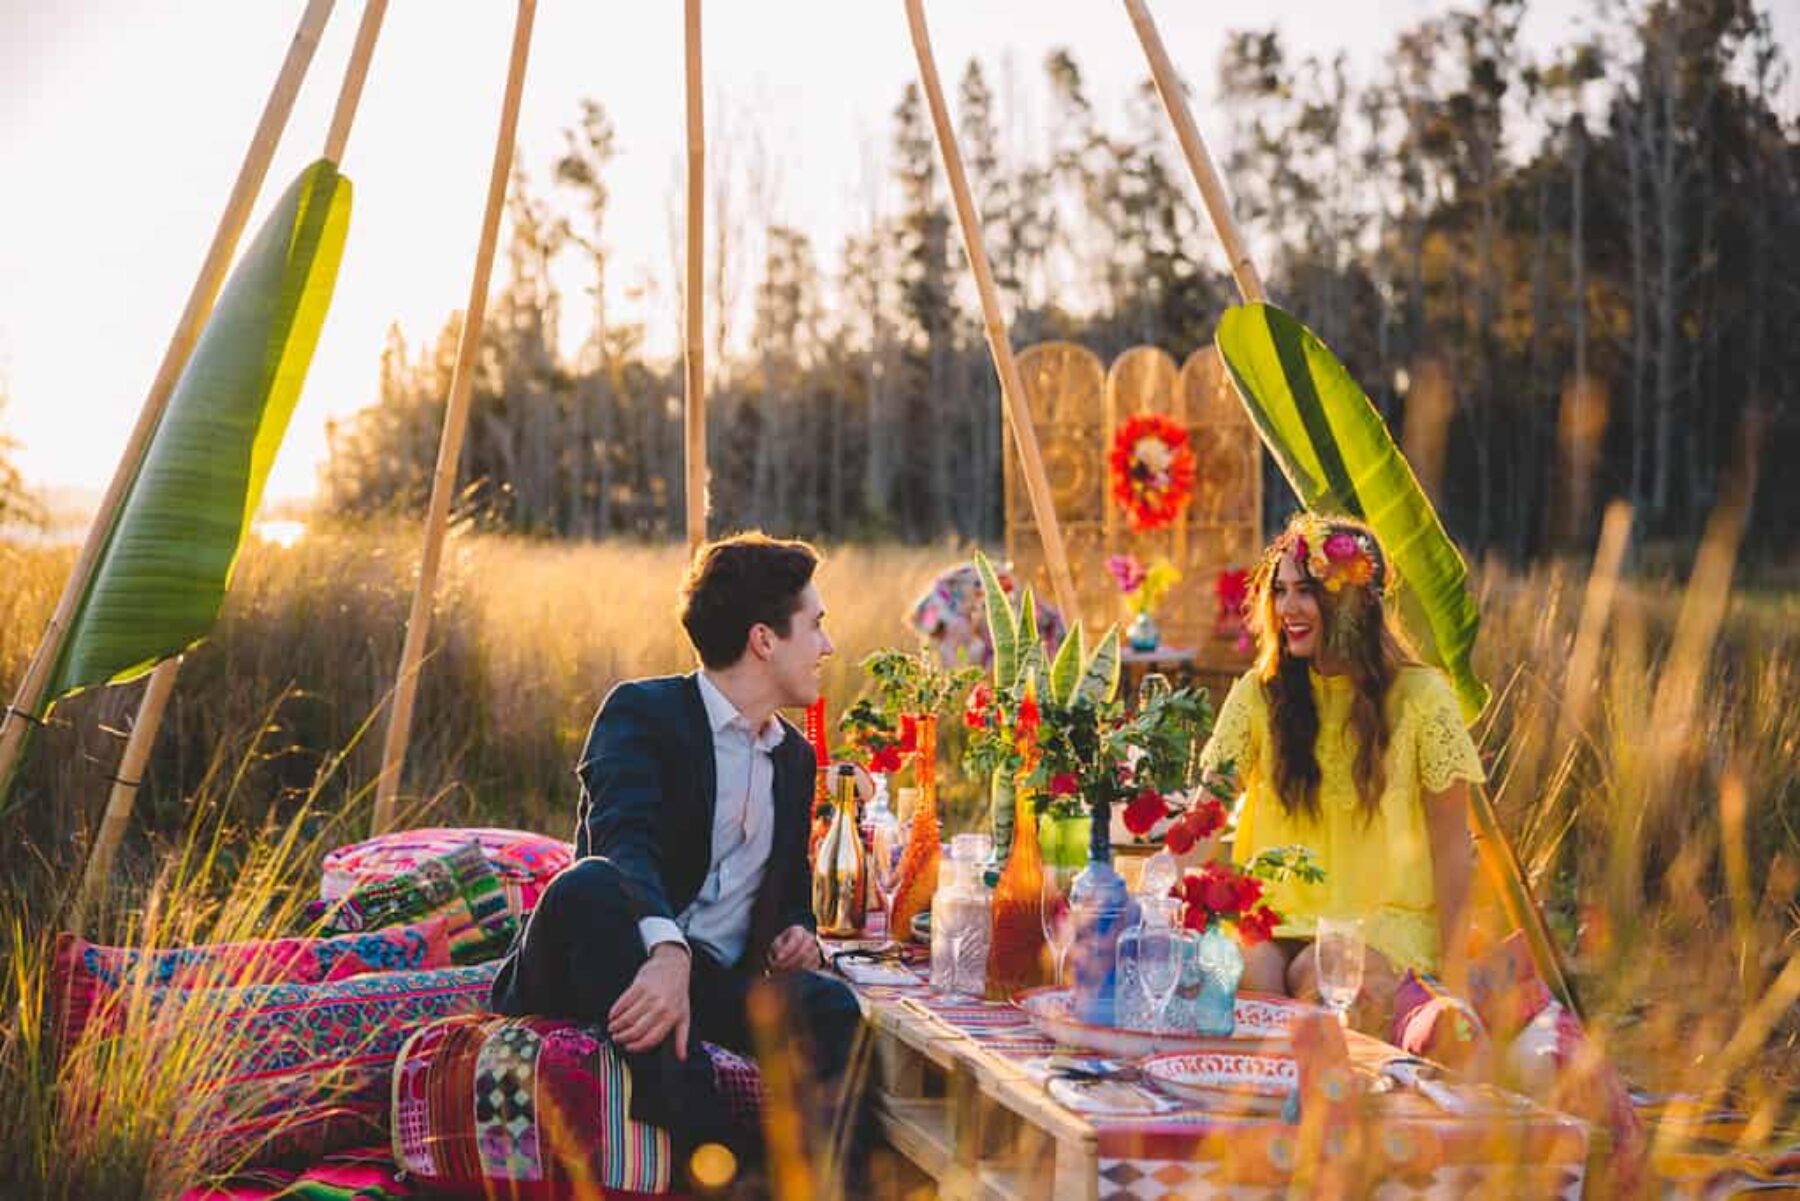 Vibrant Mexican fiesta wedding inspiration